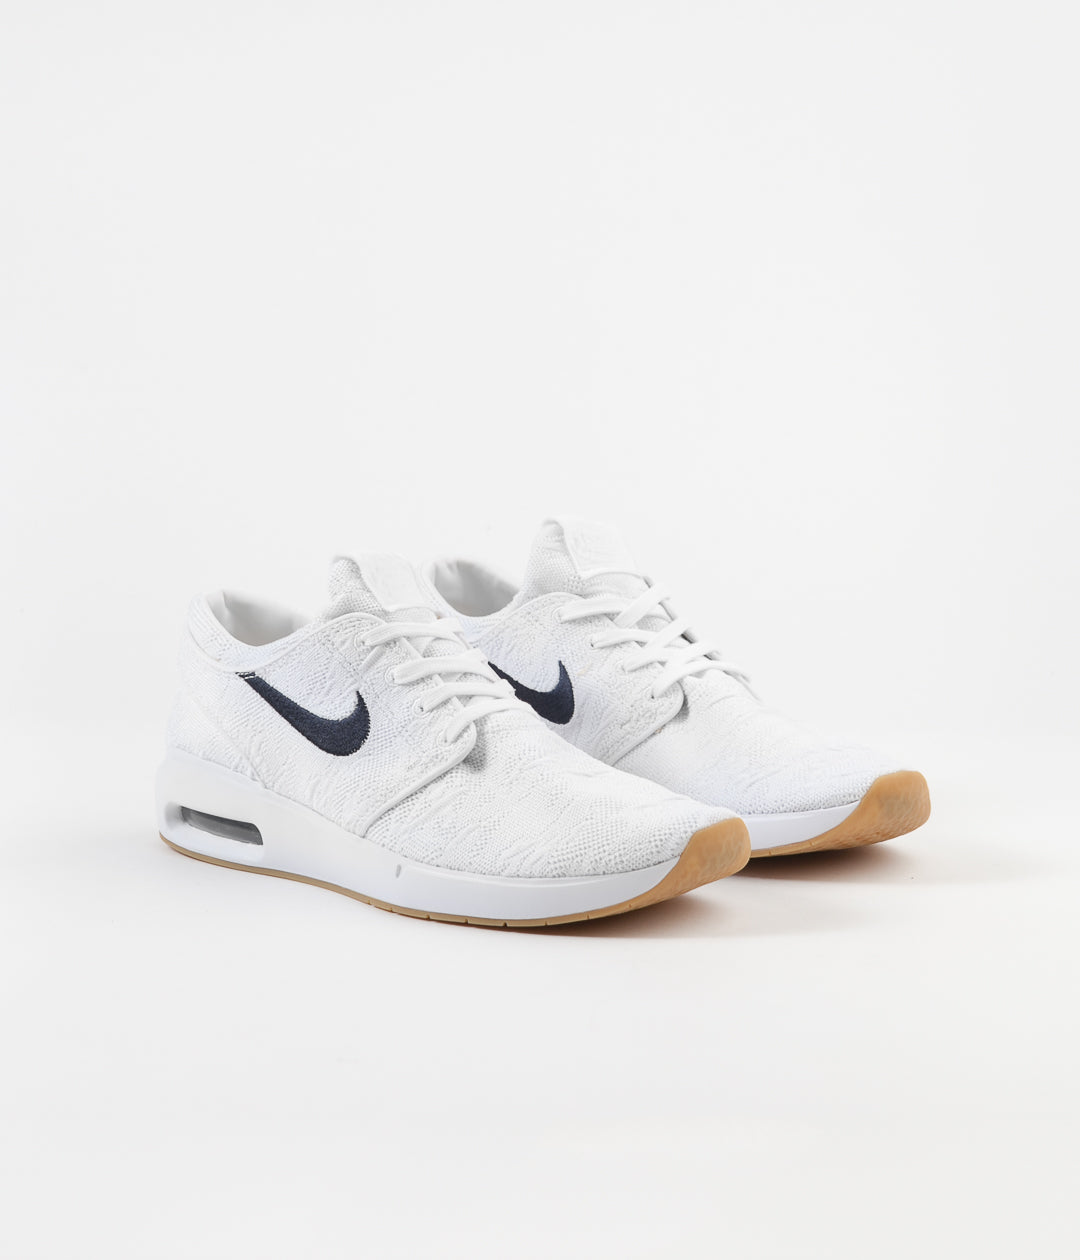 Nike SB Air Max Stefan Janoski 2 Shoes - White / - Celestial | Flatspot